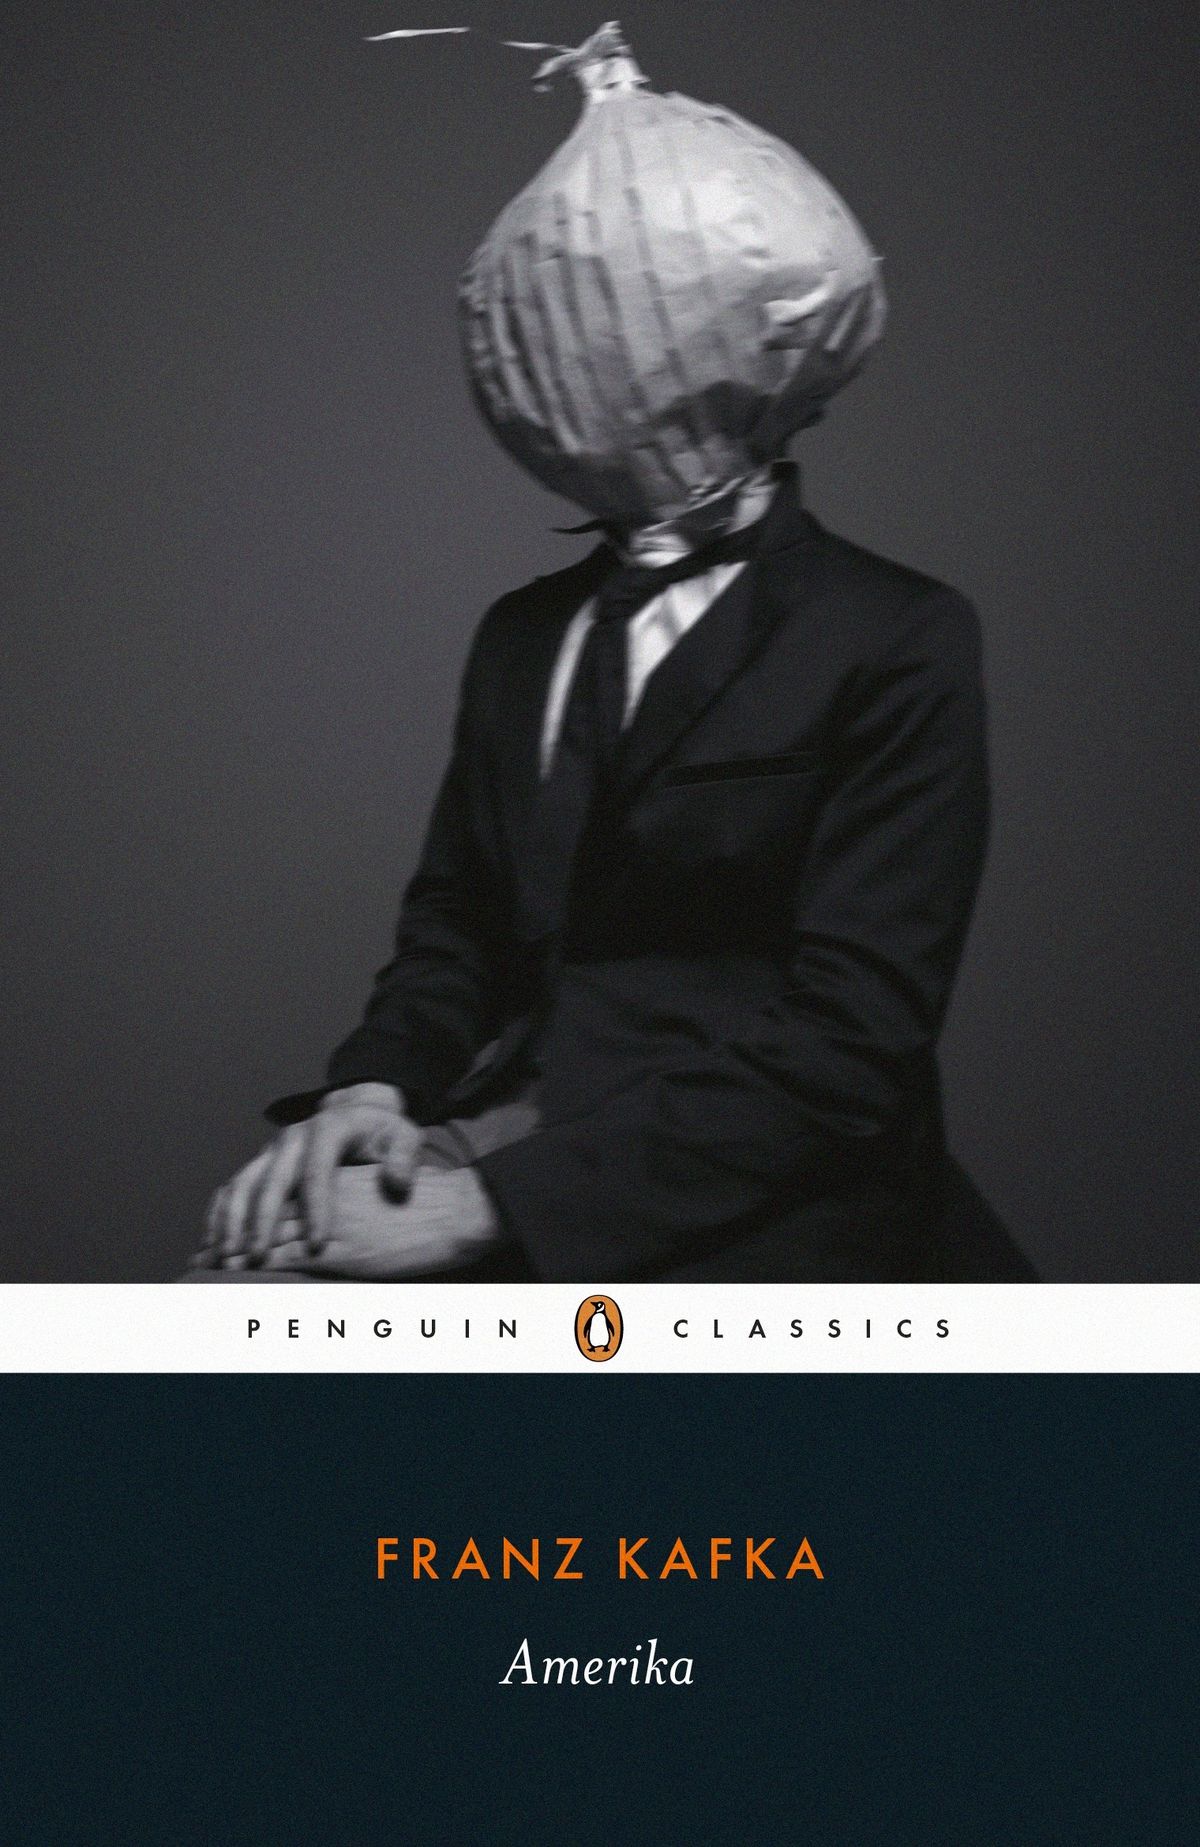 Franz Kafka’s Amerika&nbsp;cover featuring a man with an onion head